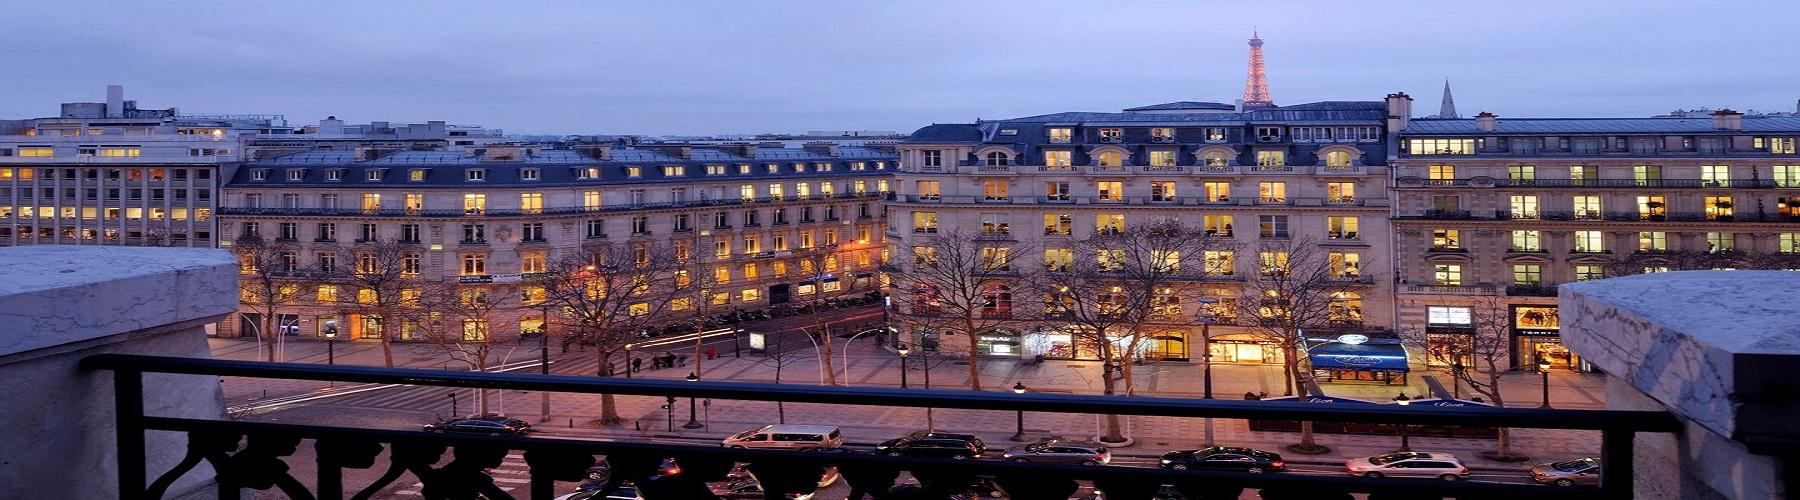 Marriott Hotel Champs Elysees Paris